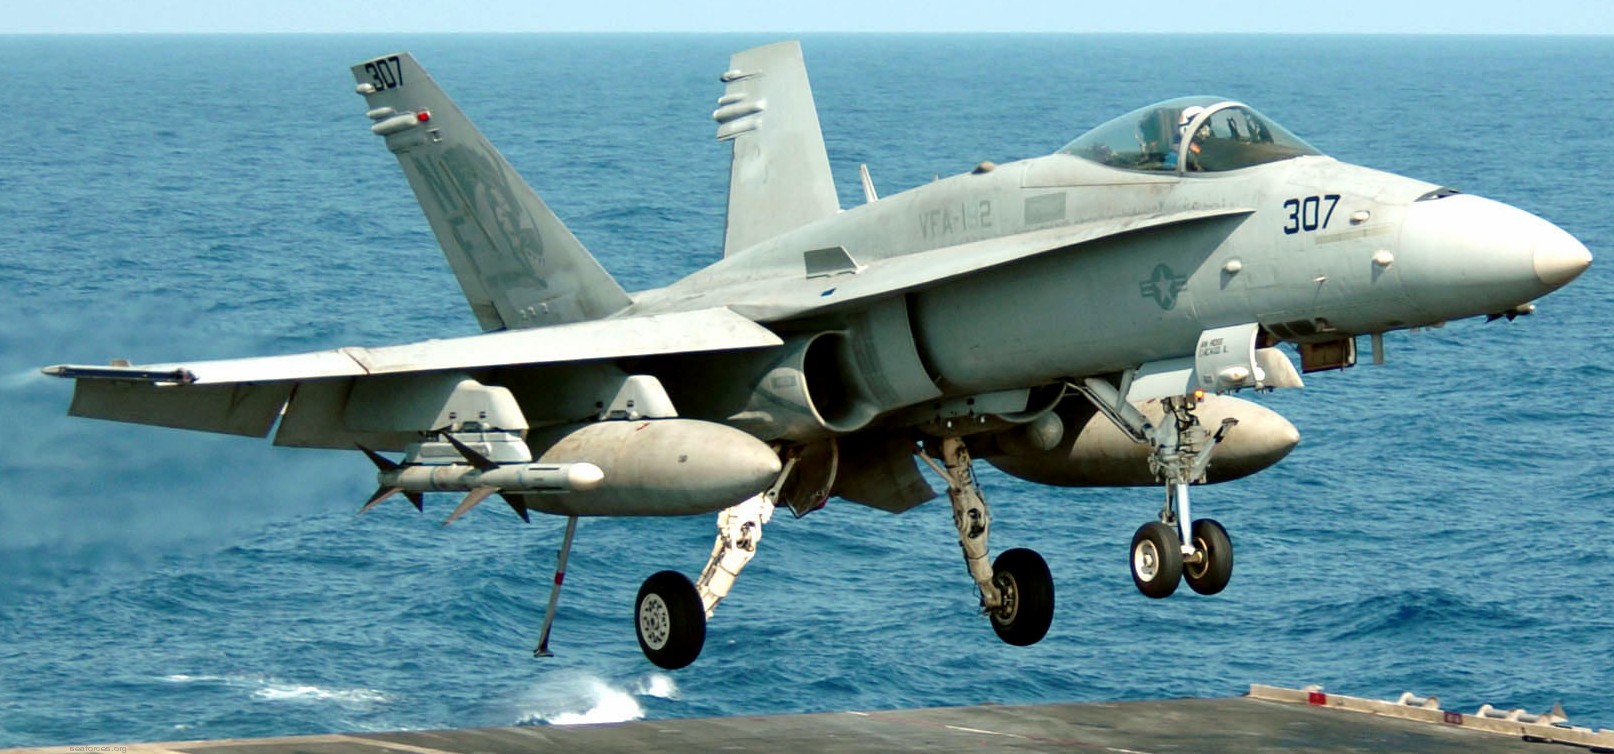 vfa-192 golden dragons strike fighter squadron navy f/a-18c hornet carrier air wing cvw-5 uss kitty hawk cv-63 62